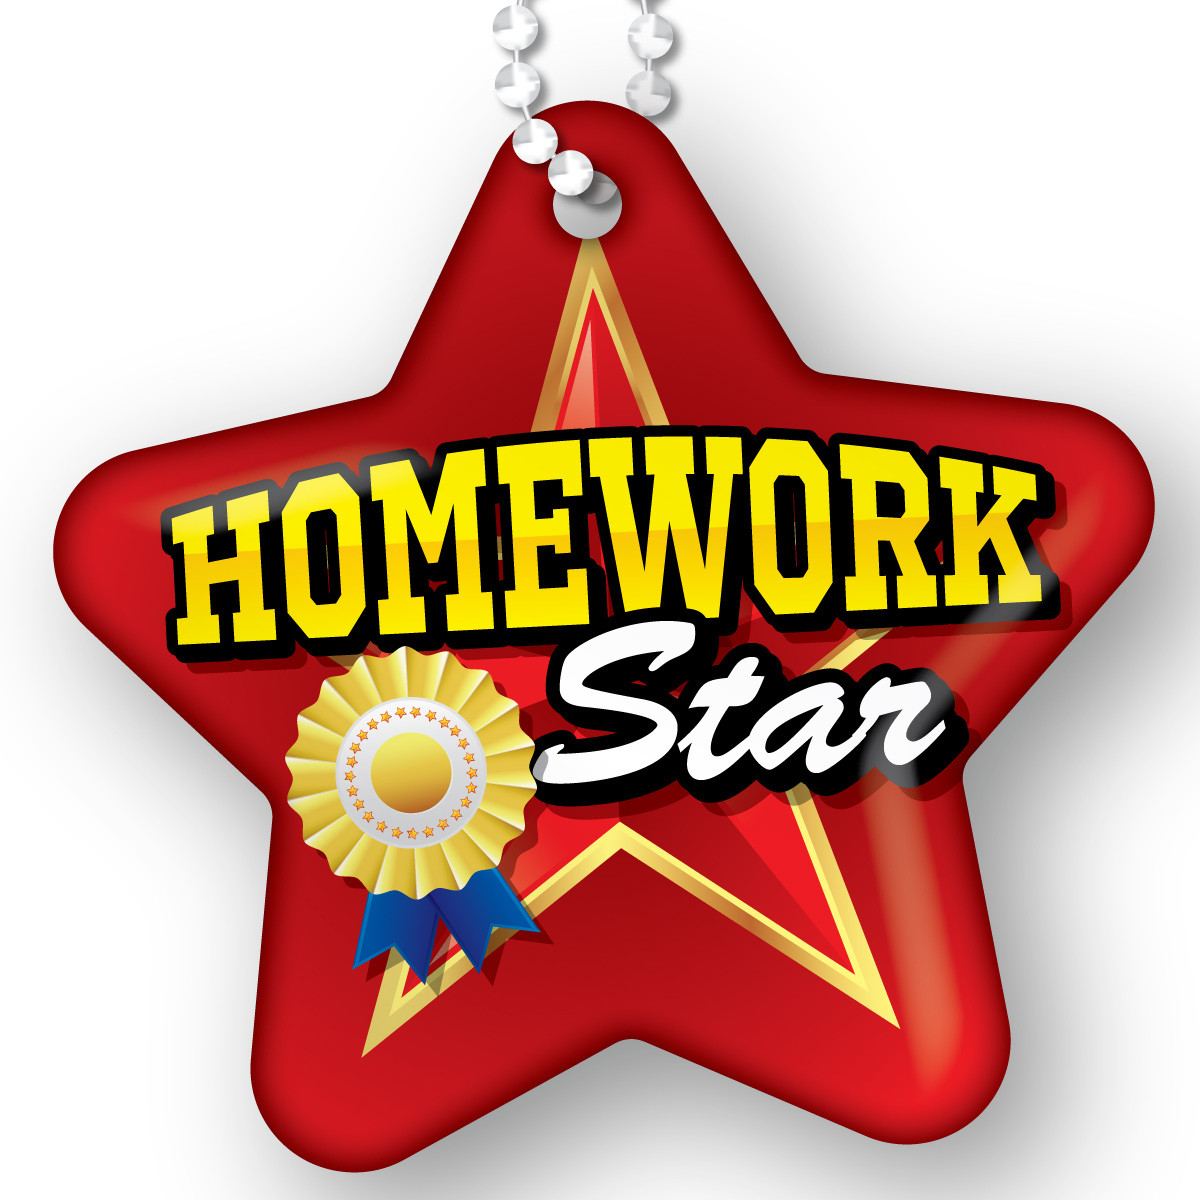 homework tag